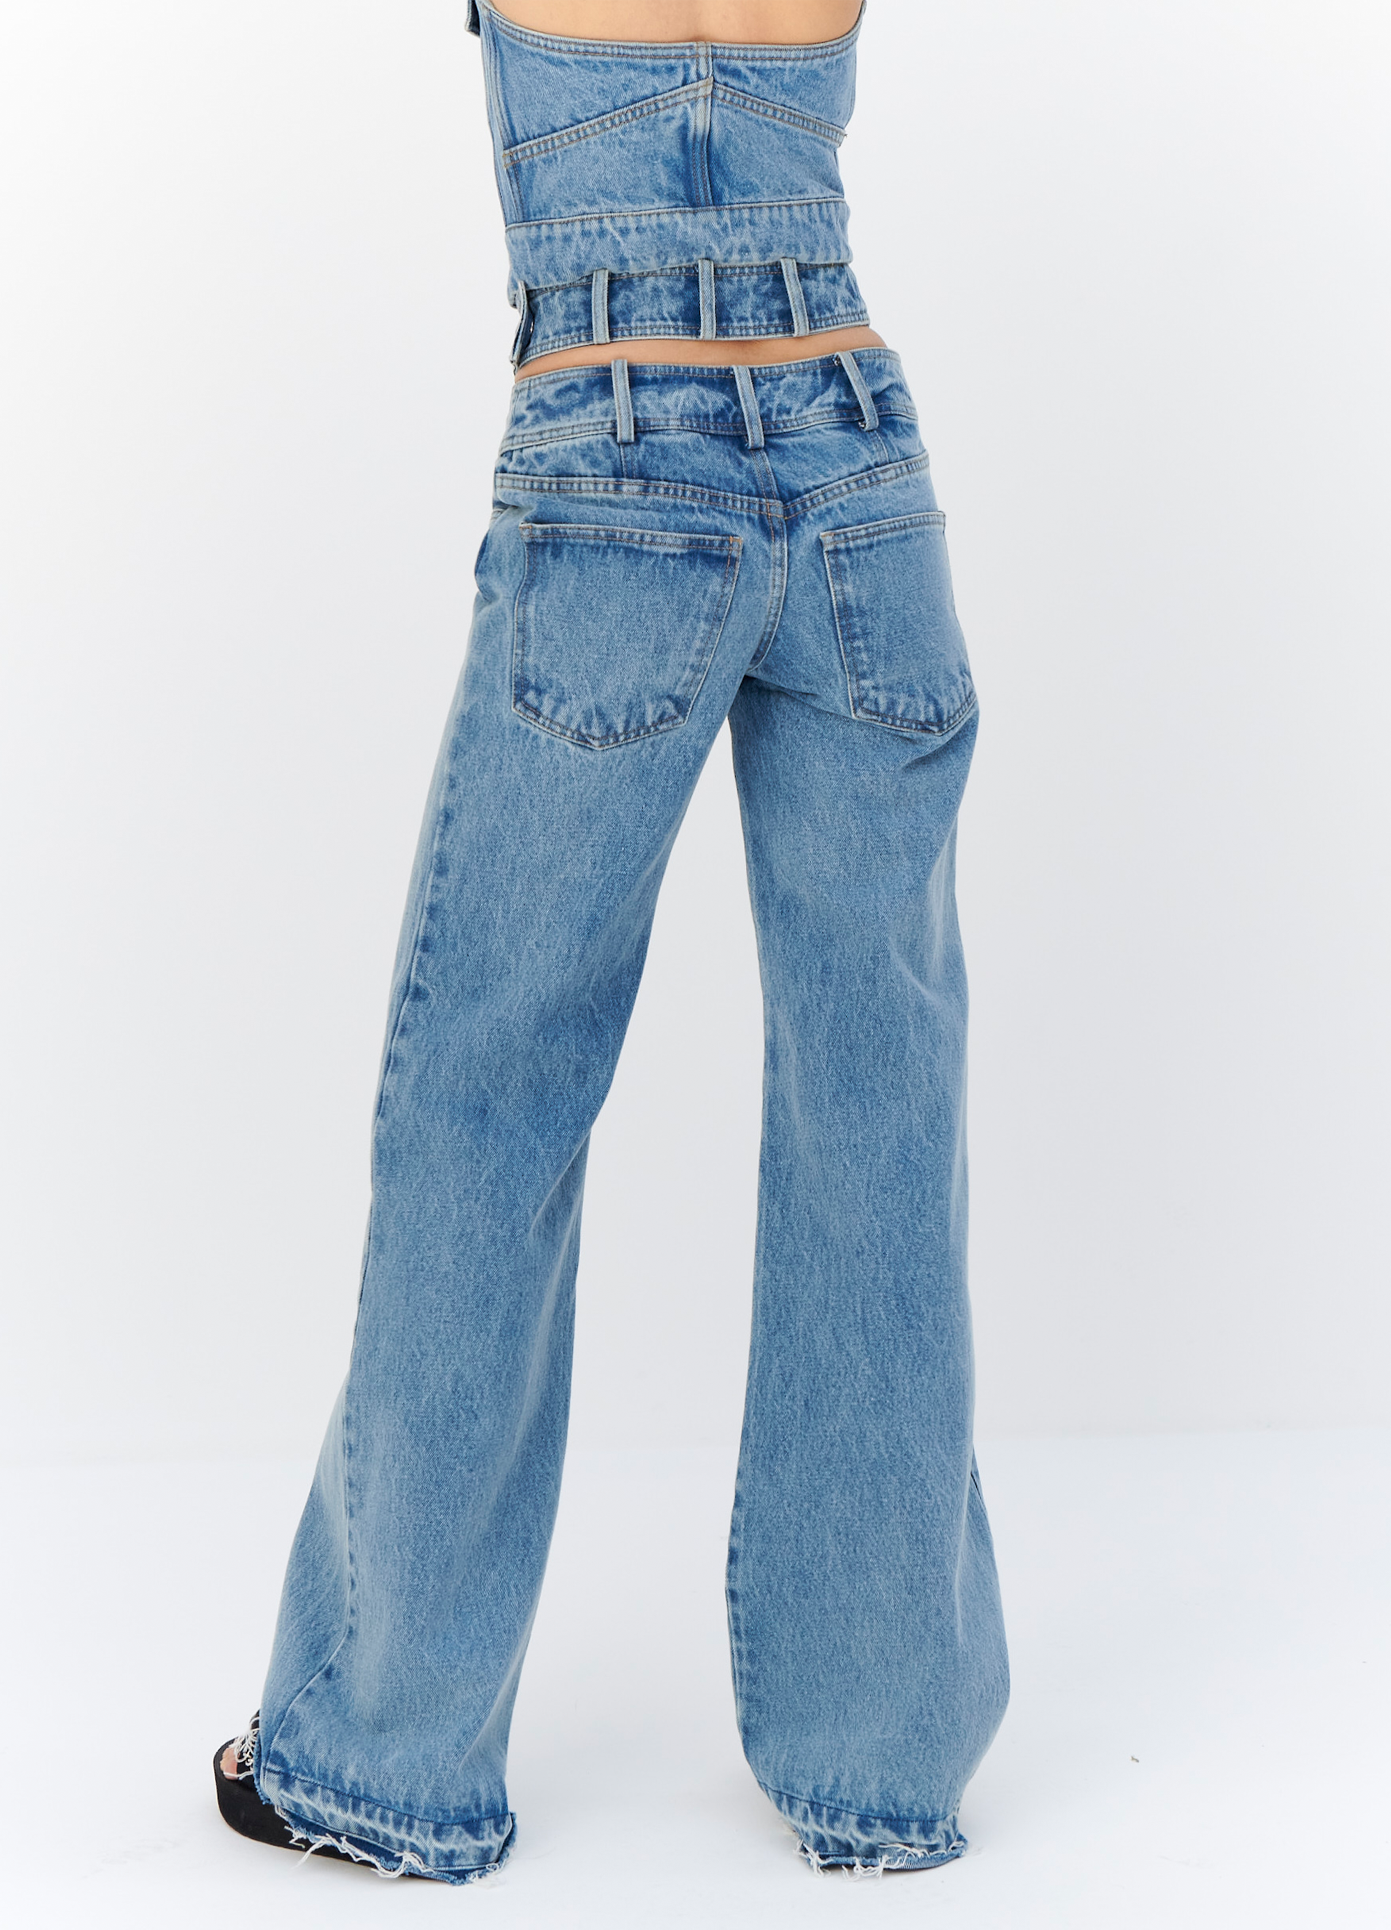 MONSE Criss Cross Waist Jeans in Indigo on model back detail view